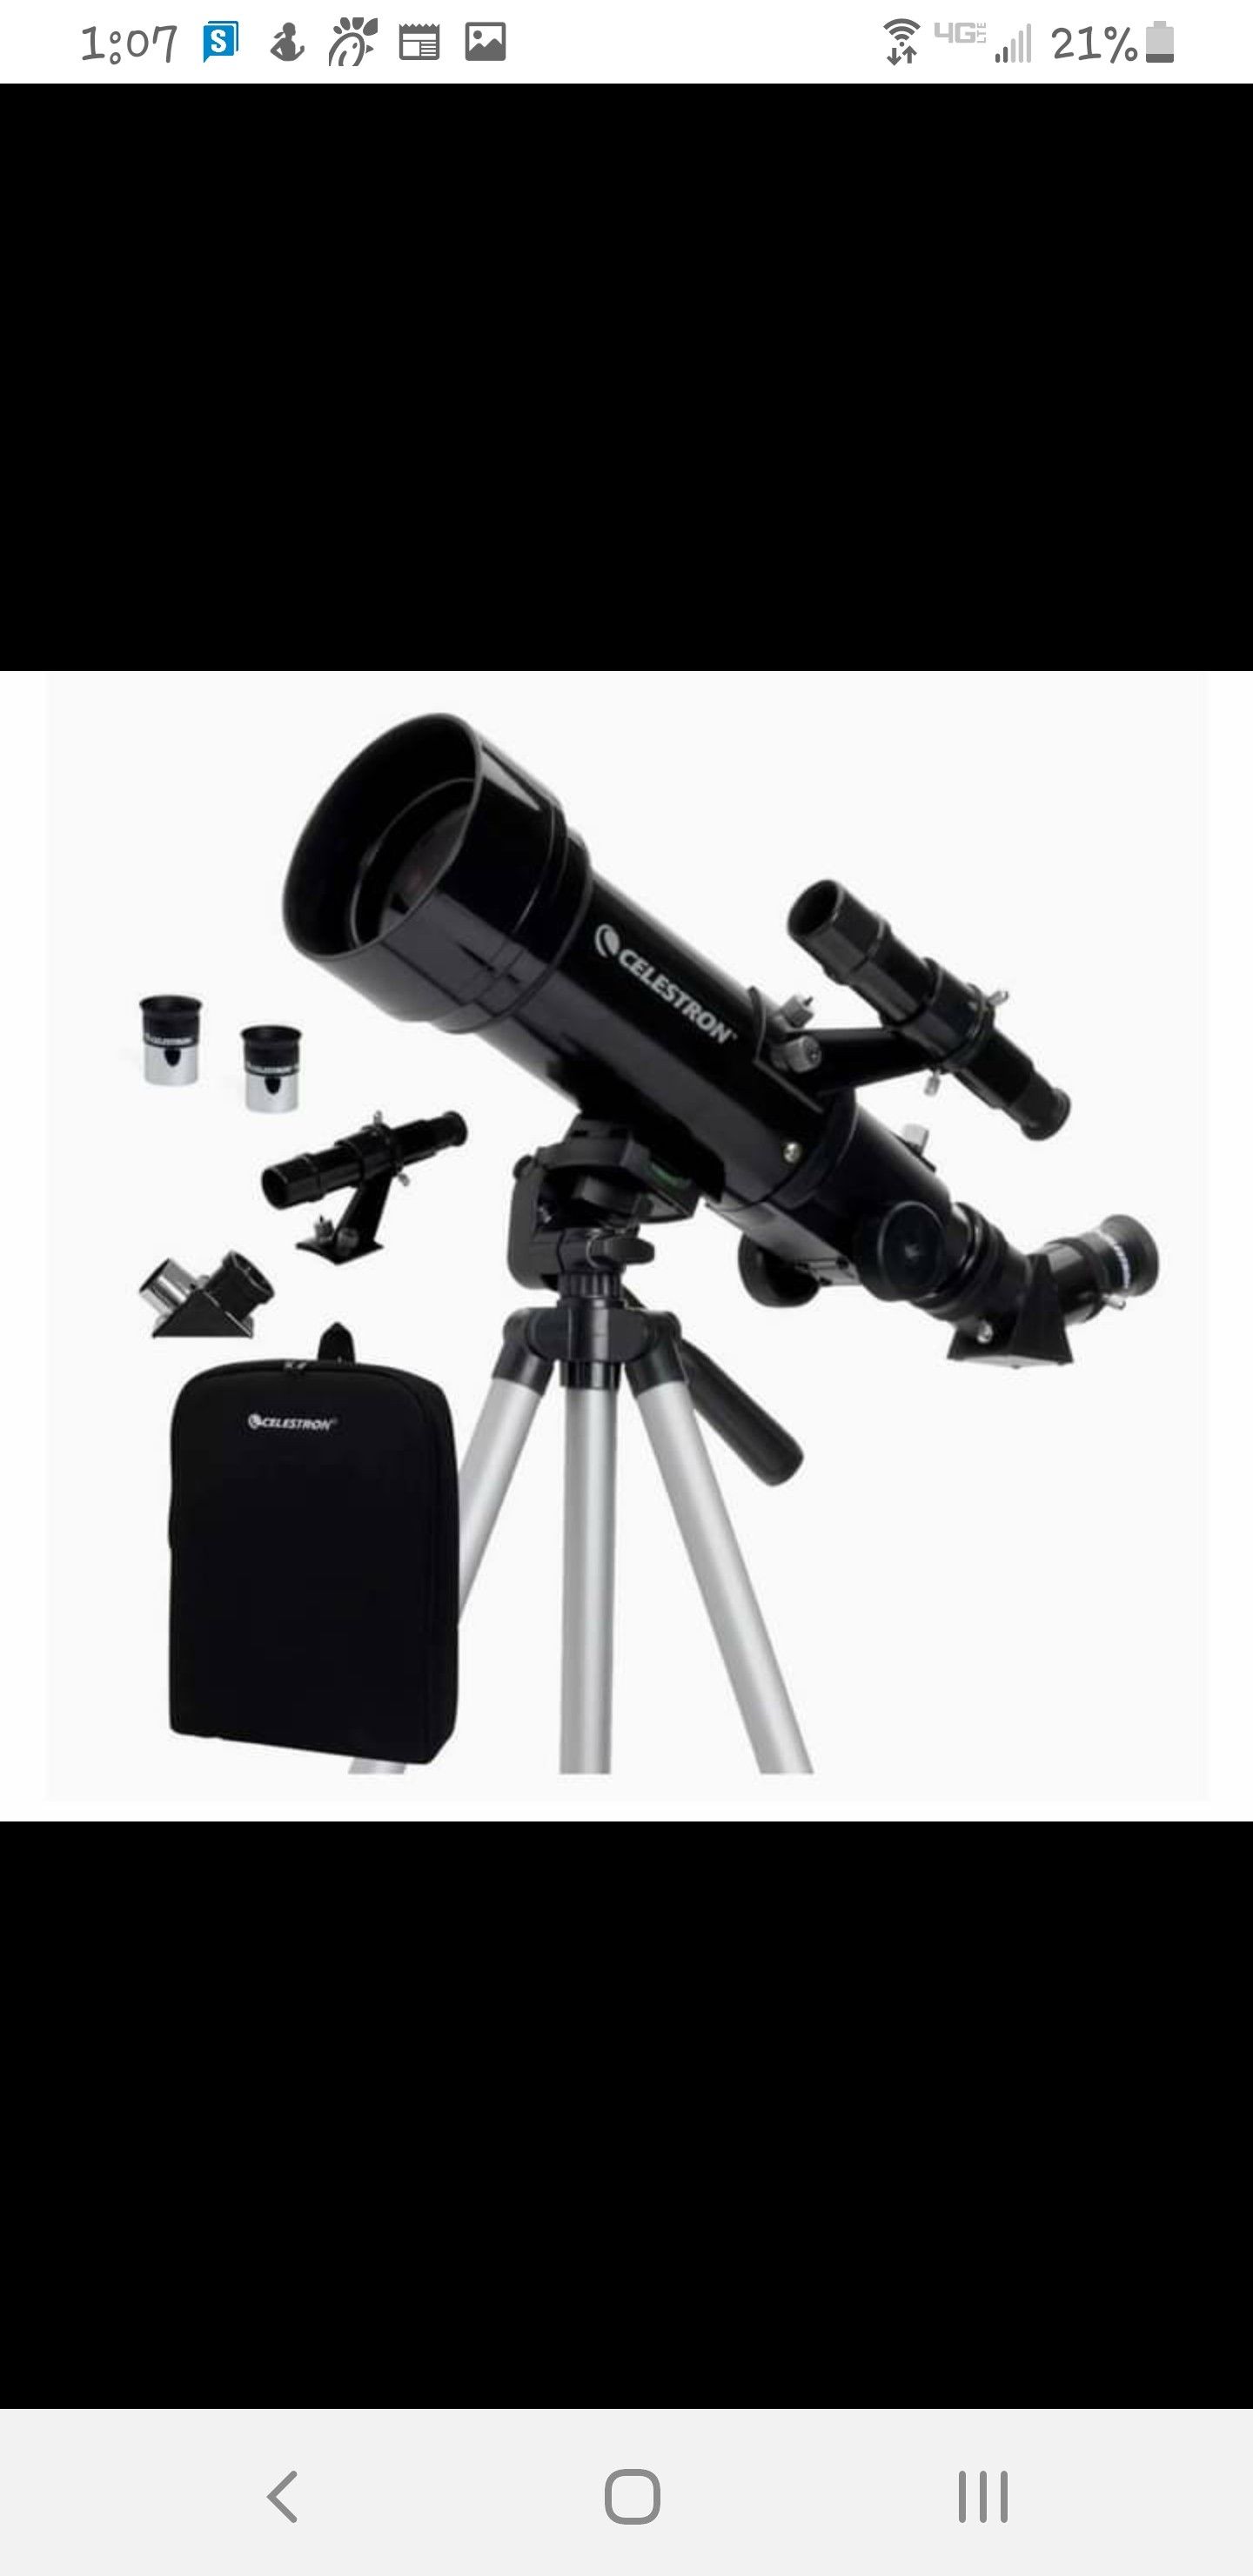 Celestron - 70mm Travel Scope - Portable Refractor Telescope - Fully-Coated Glass Optics - Ideal Telescope for Beginners -